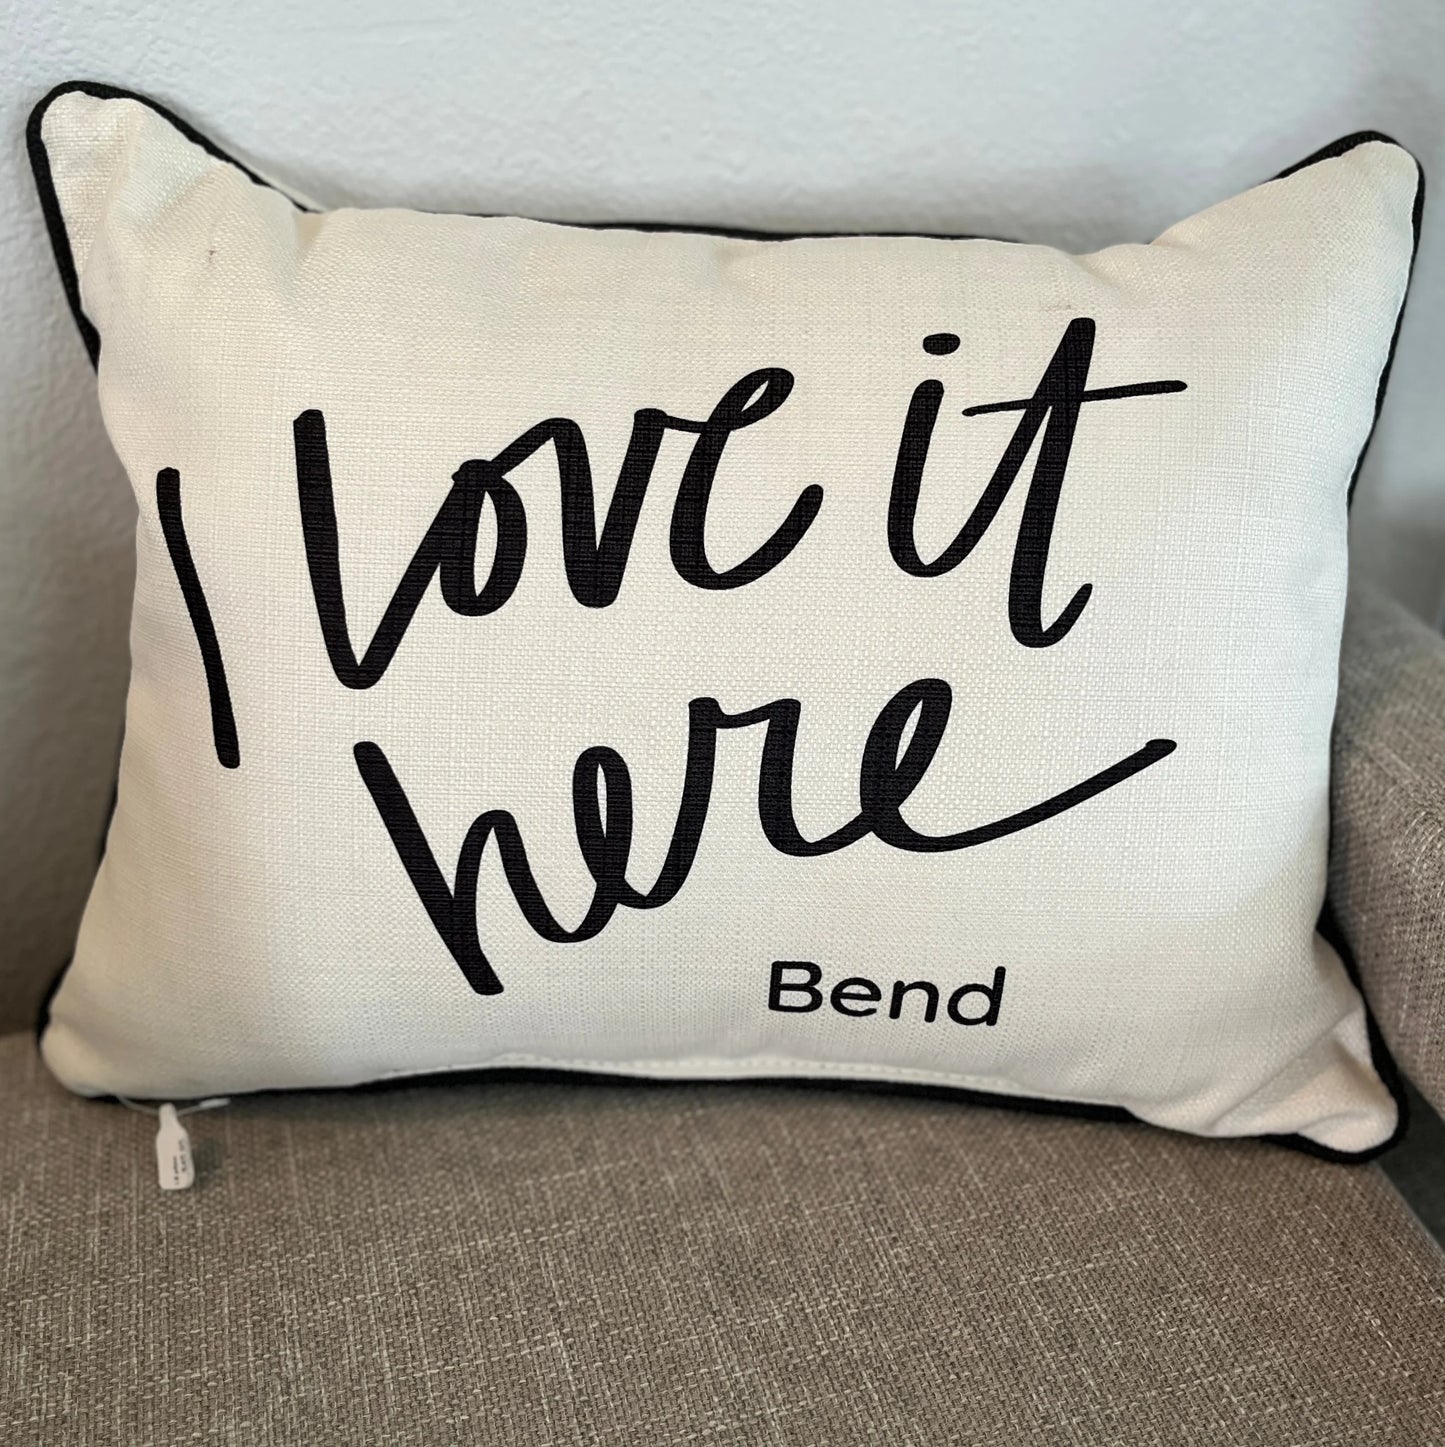 Bend Pillow - 2 Styles